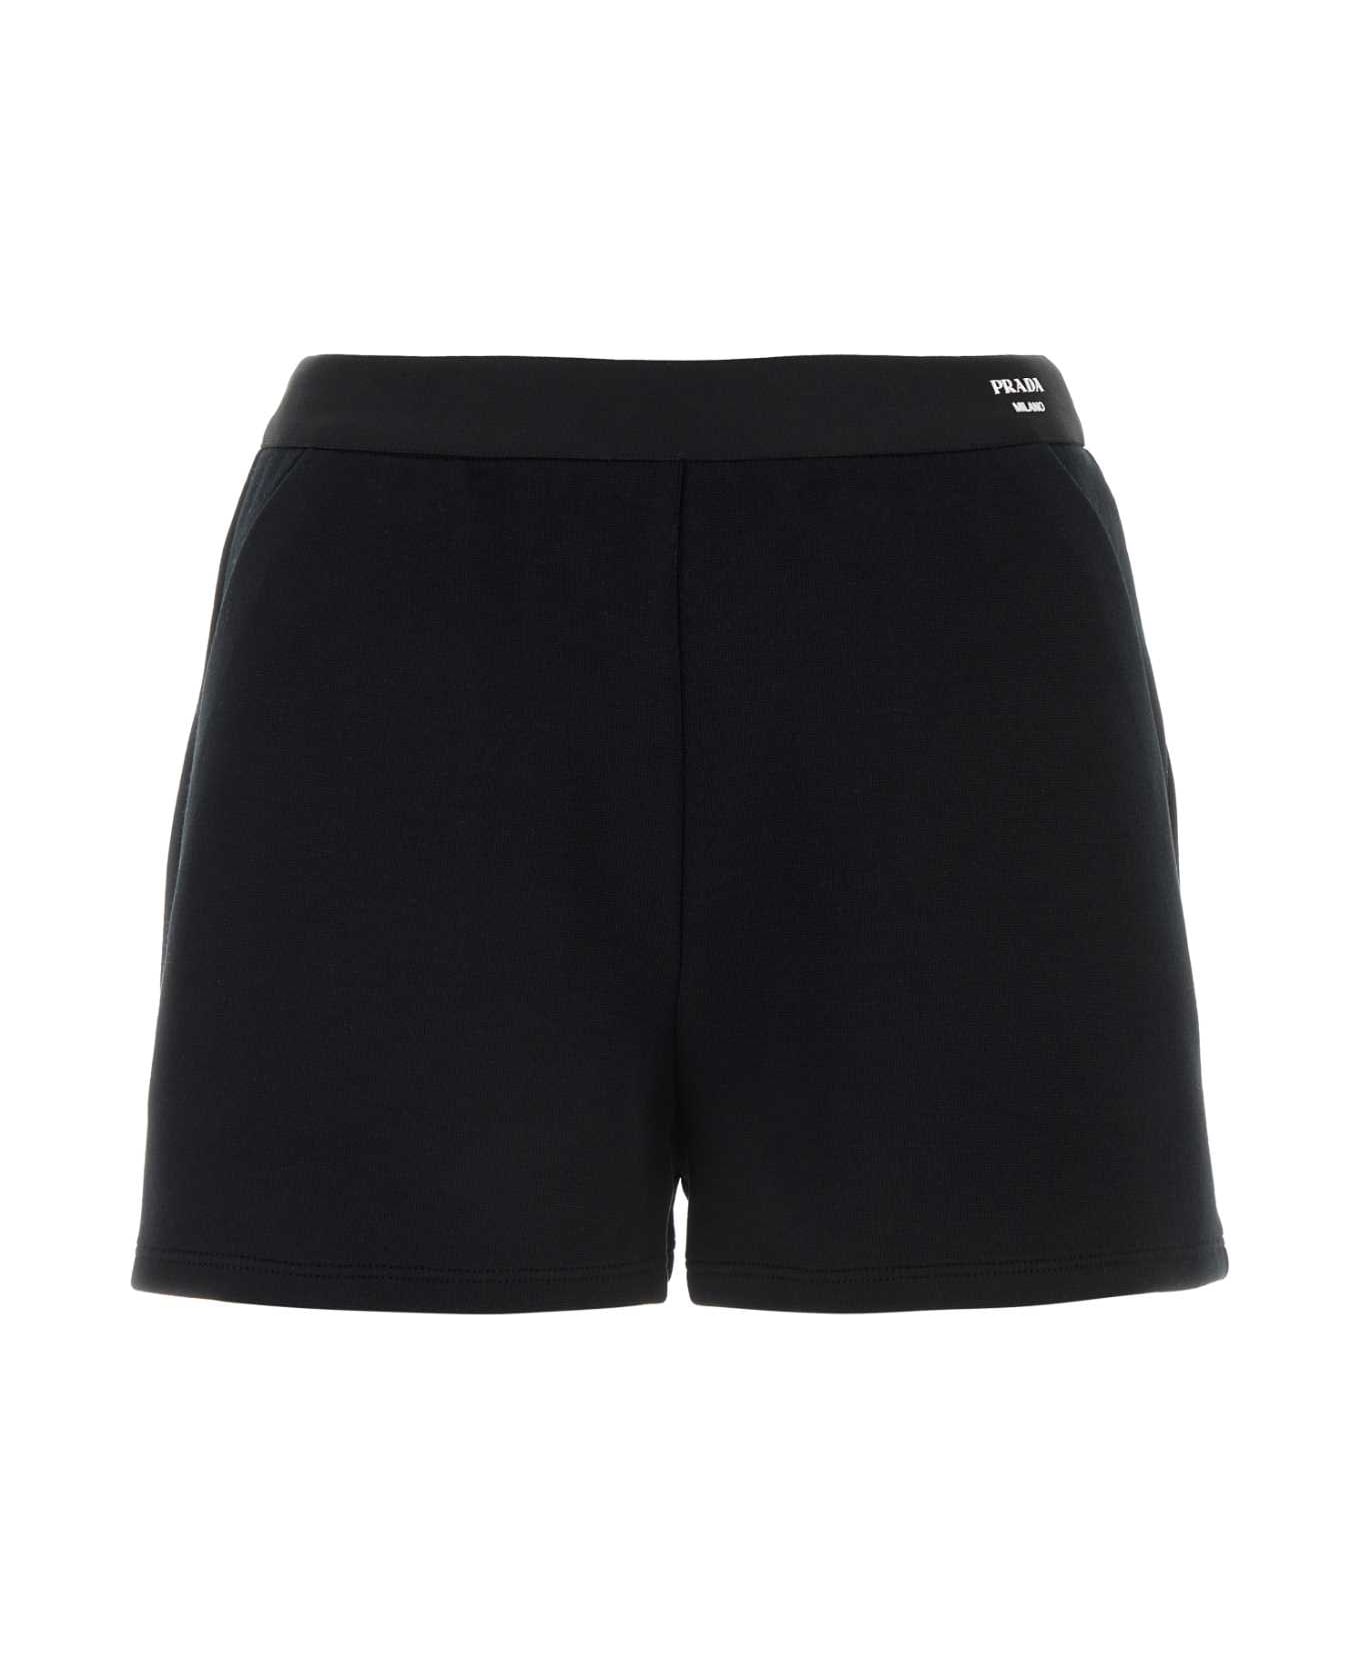 Prada Black Stretch Cotton Blend Shorts - NERO ショートパンツ